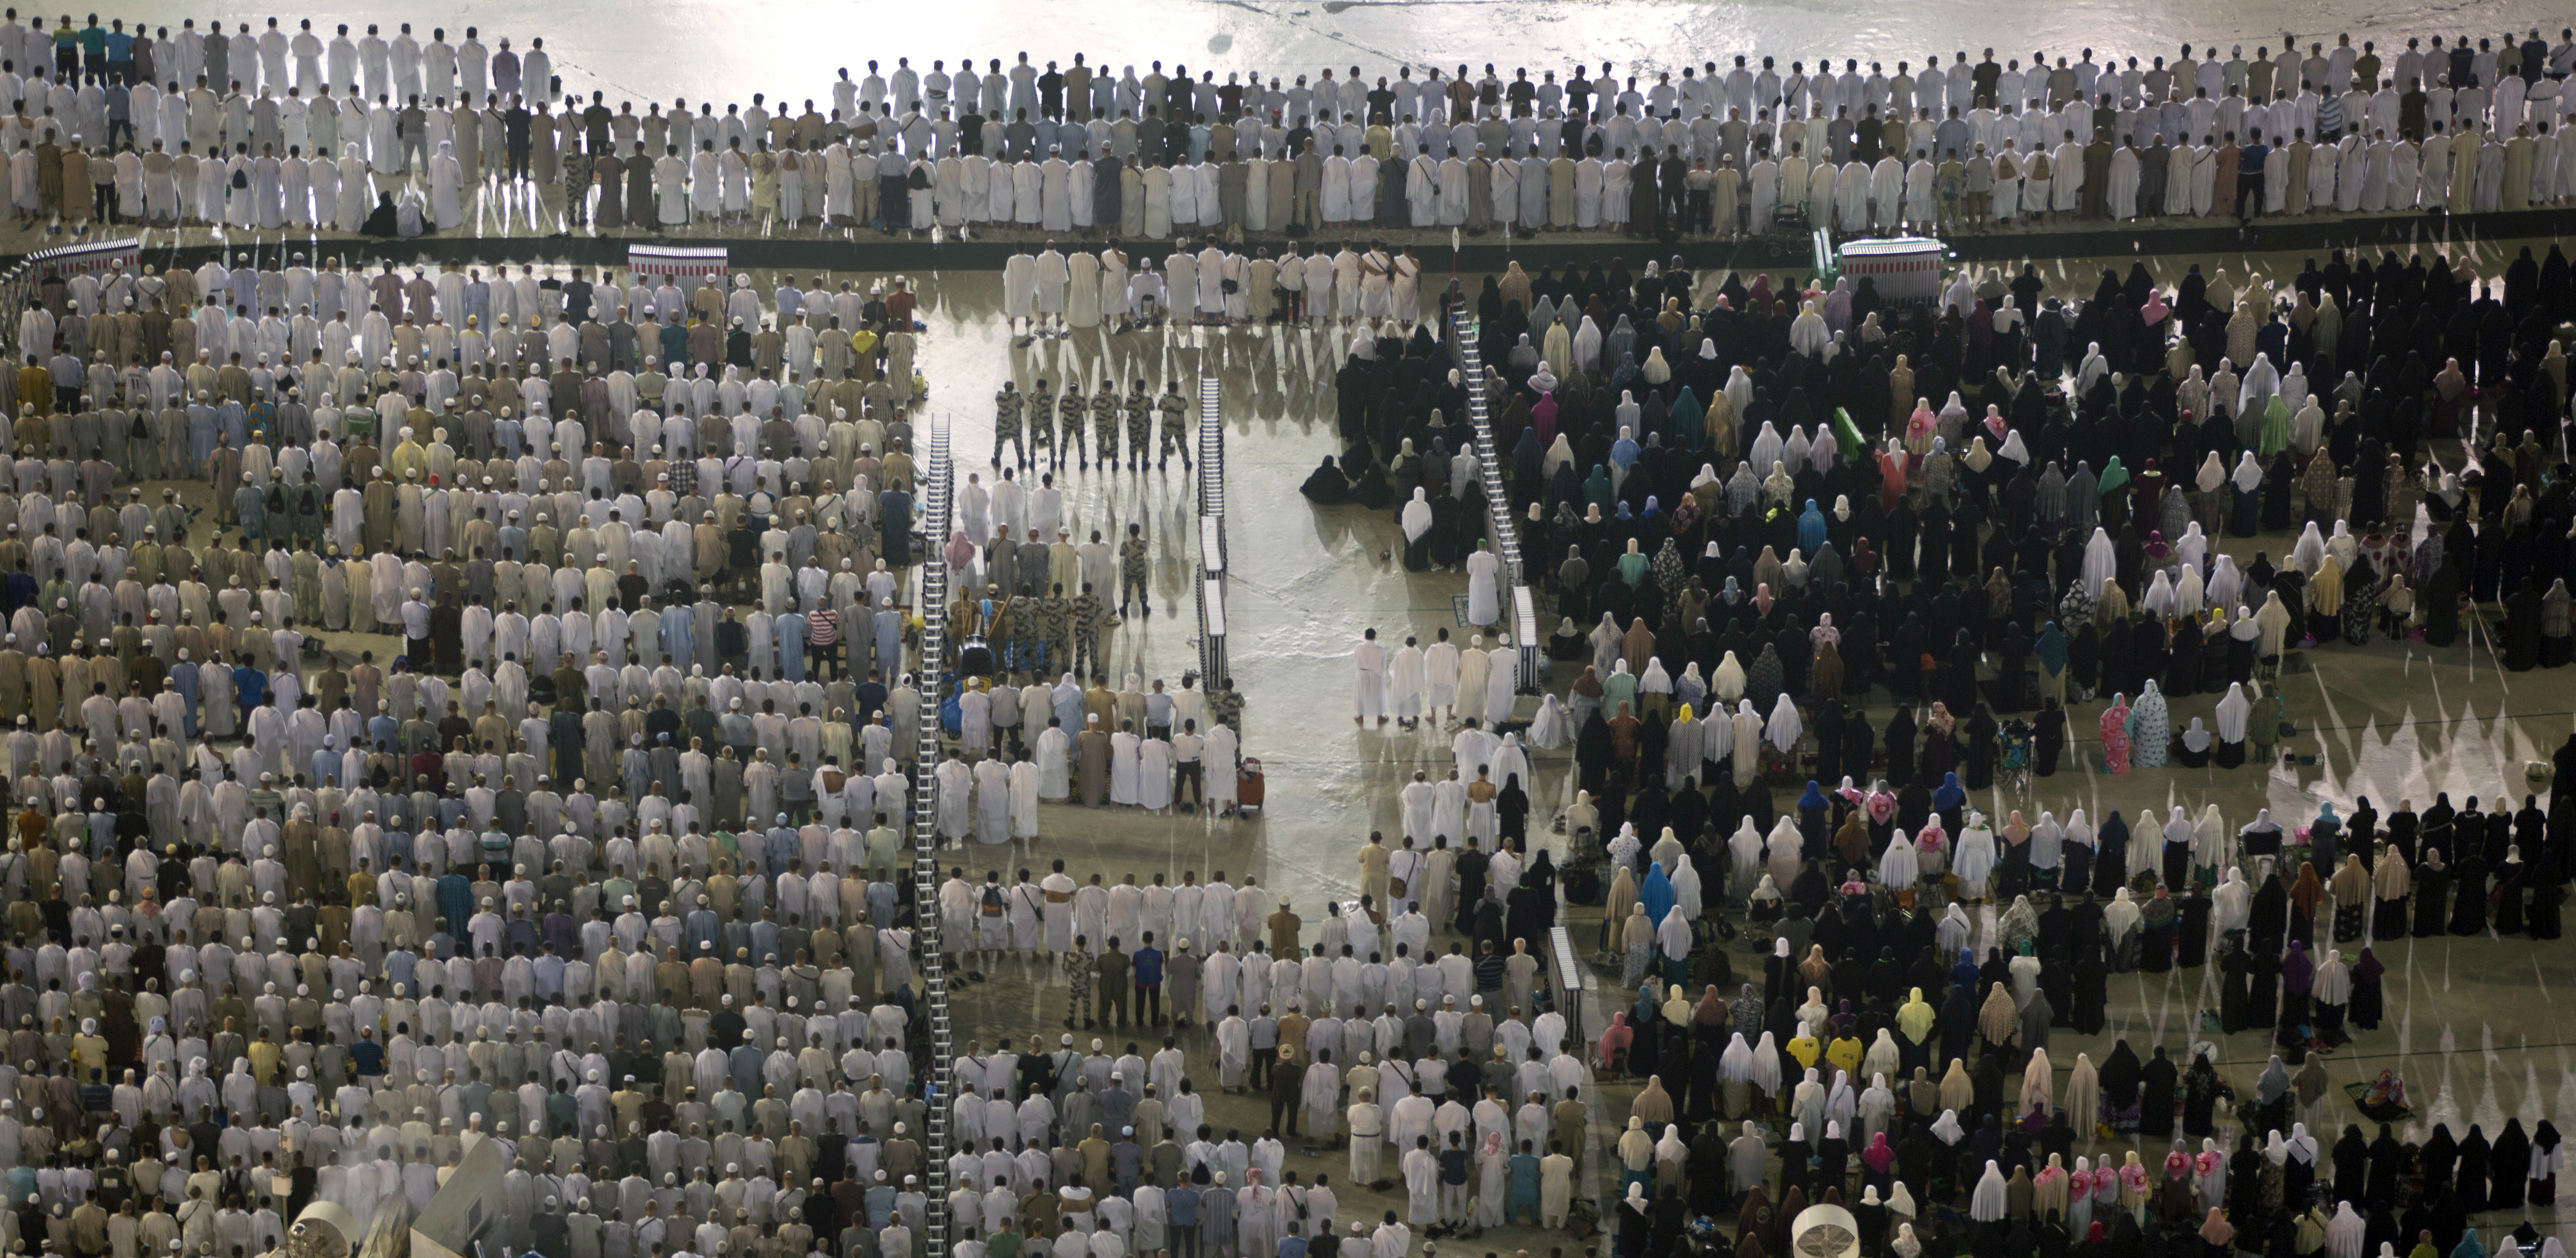 Muslim pilgrims pray at the Grand Mosque, ahead of the annual Hajj pilgrimage in the Muslim holy city of Mecca, Saudi Arabia, Tuesday, Aug. 29, 2017. (AP Photo/Khalil Hamra)